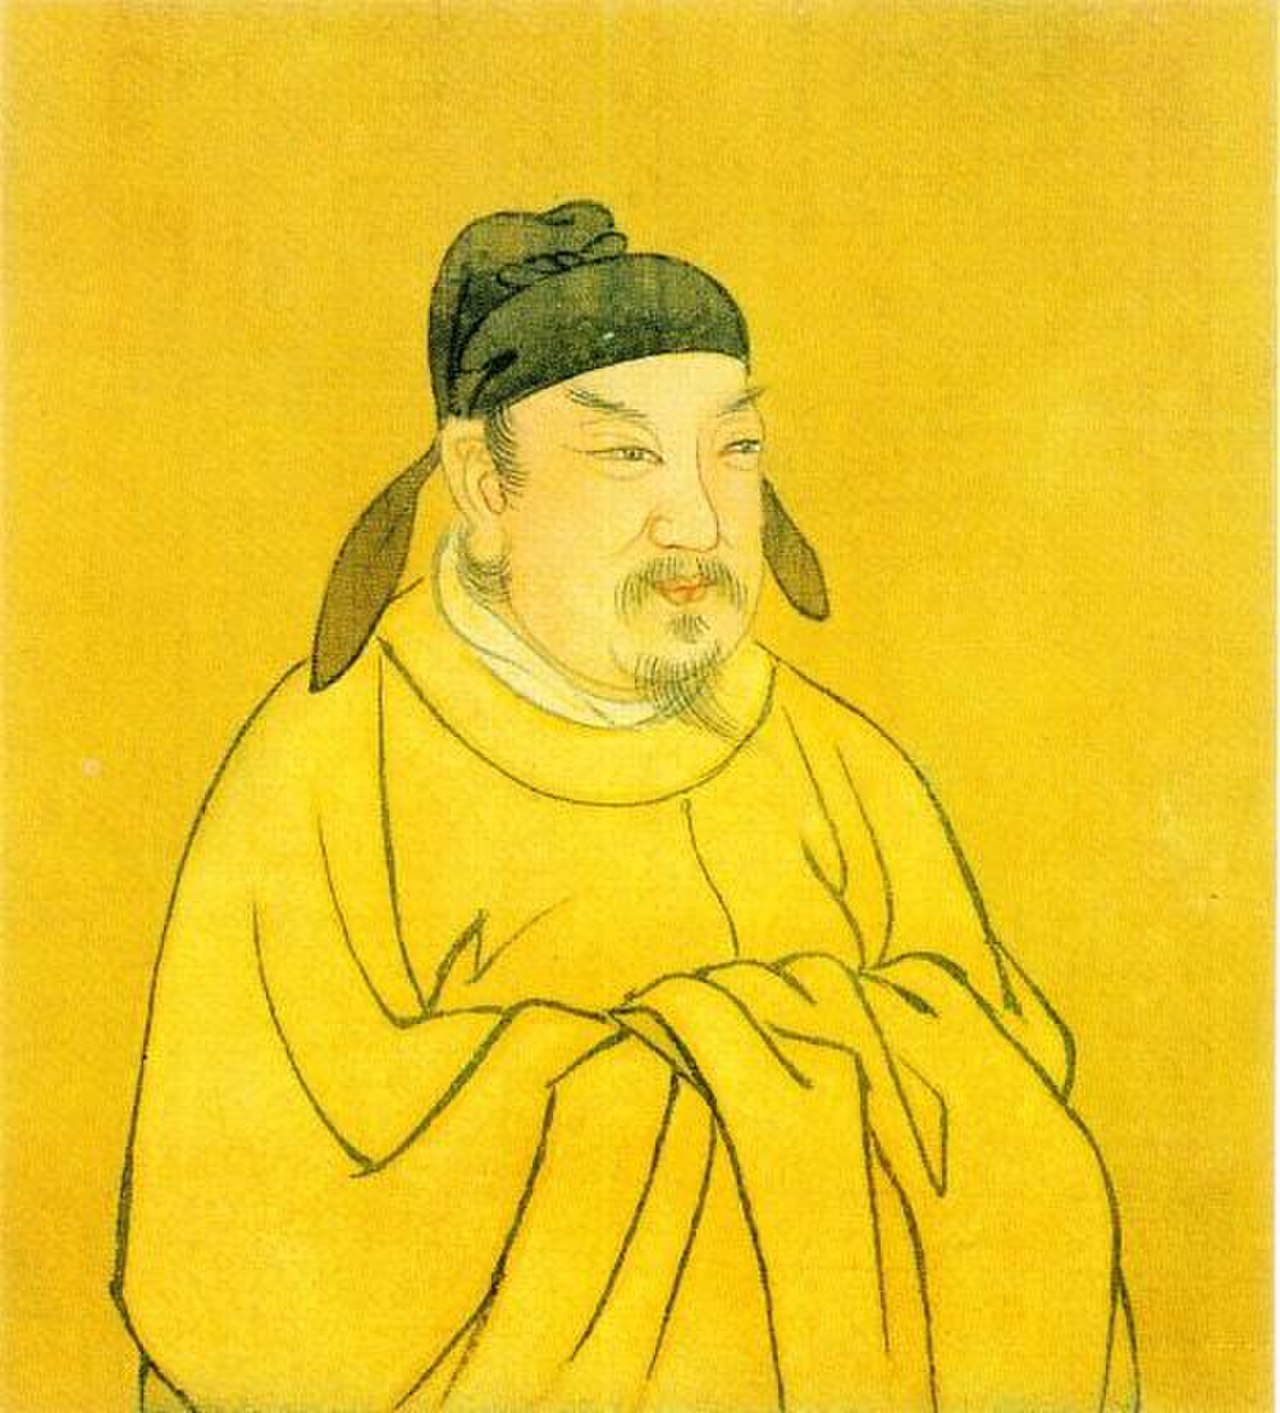 Emperor Wu of Chen.jpg